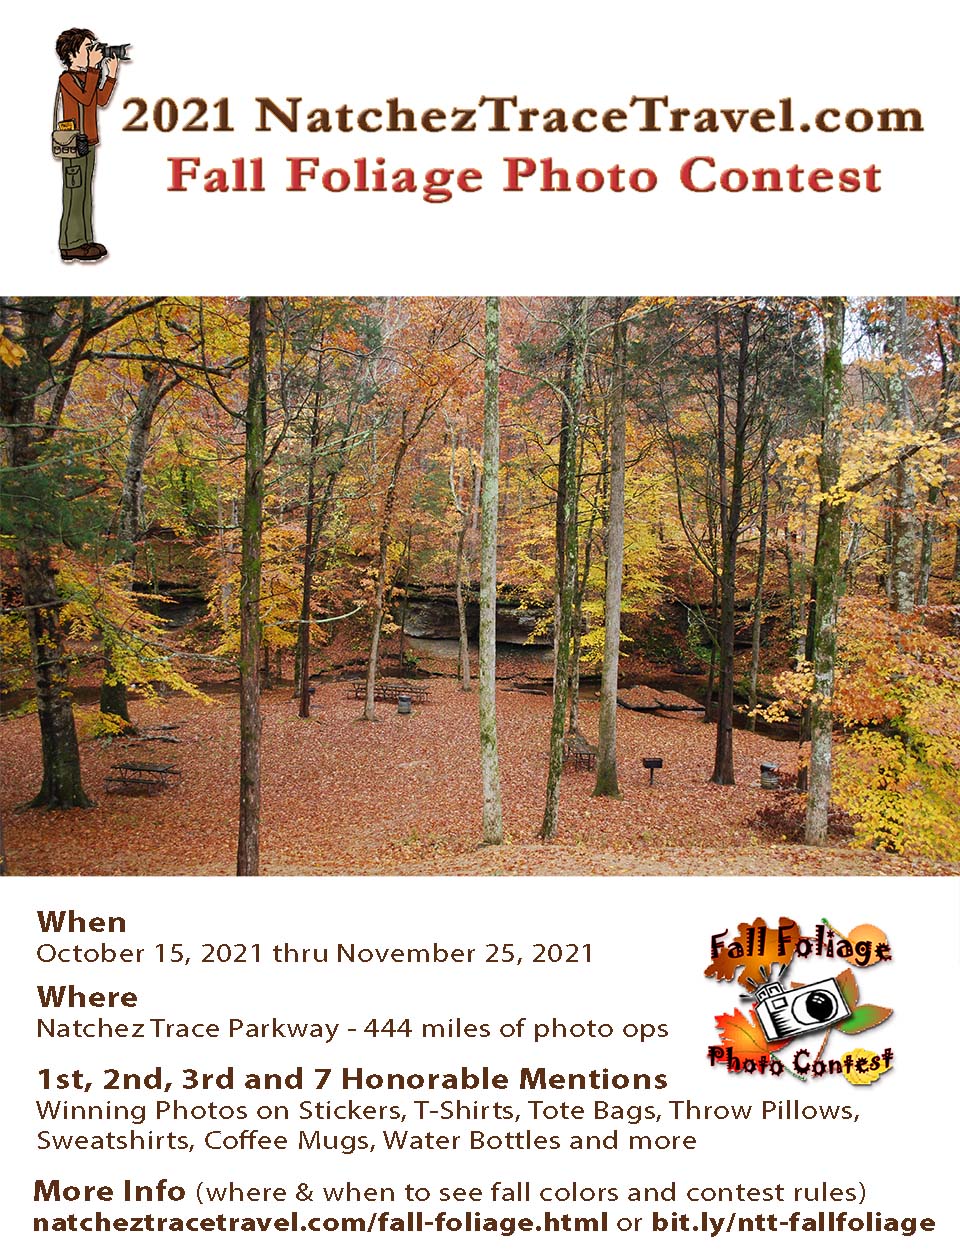 2021 Natchez Trace Fall Foliage Photo Contest